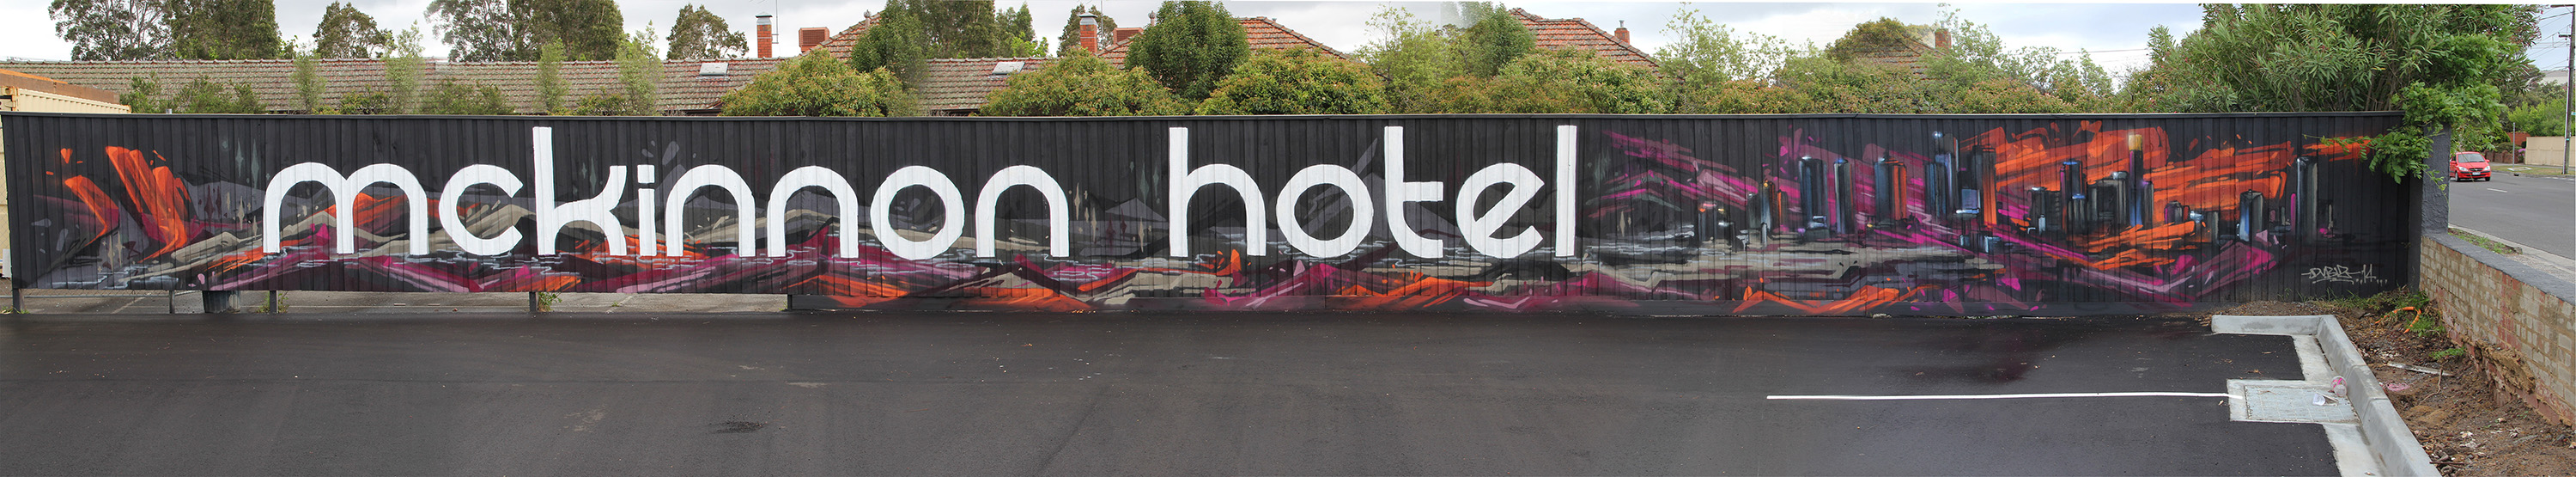 City horizon graffiti for mckinnon hotel